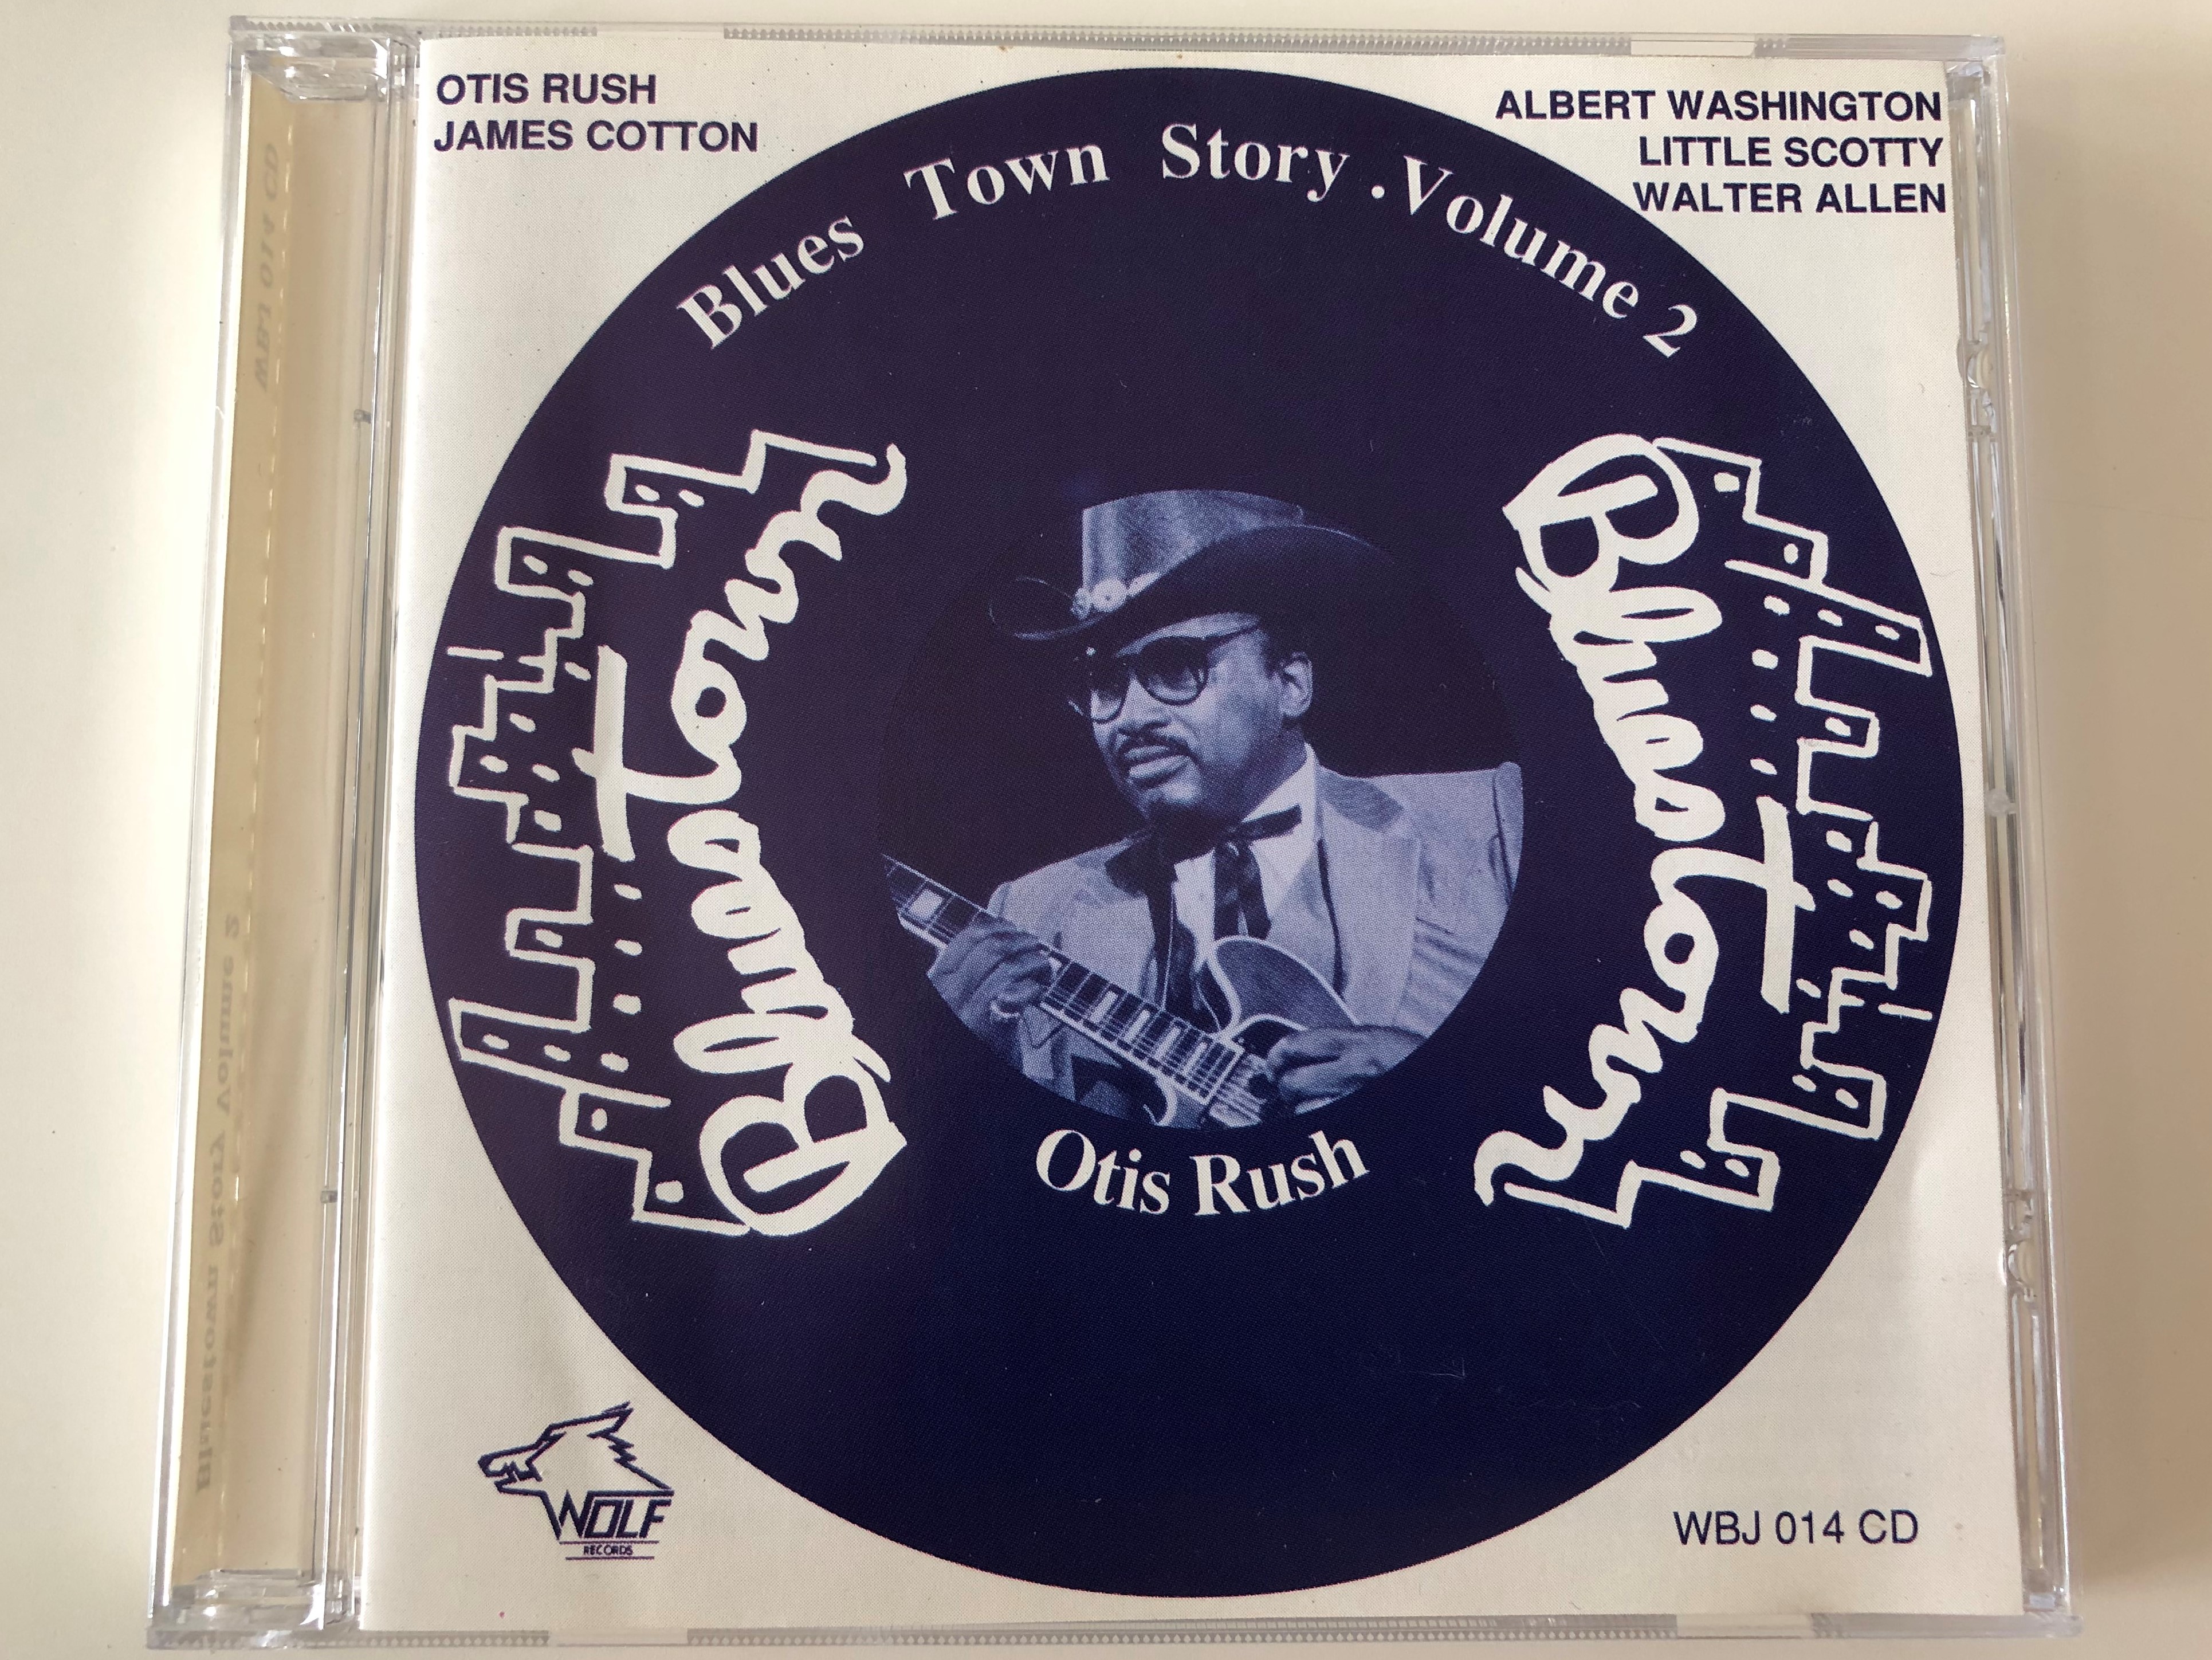 bluestown-story-volume-2-otis-rush-james-cotton-albert-washington-little-scotty-walter-allen-wolf-records-audio-cd-wbj-014-cd-1-.jpg